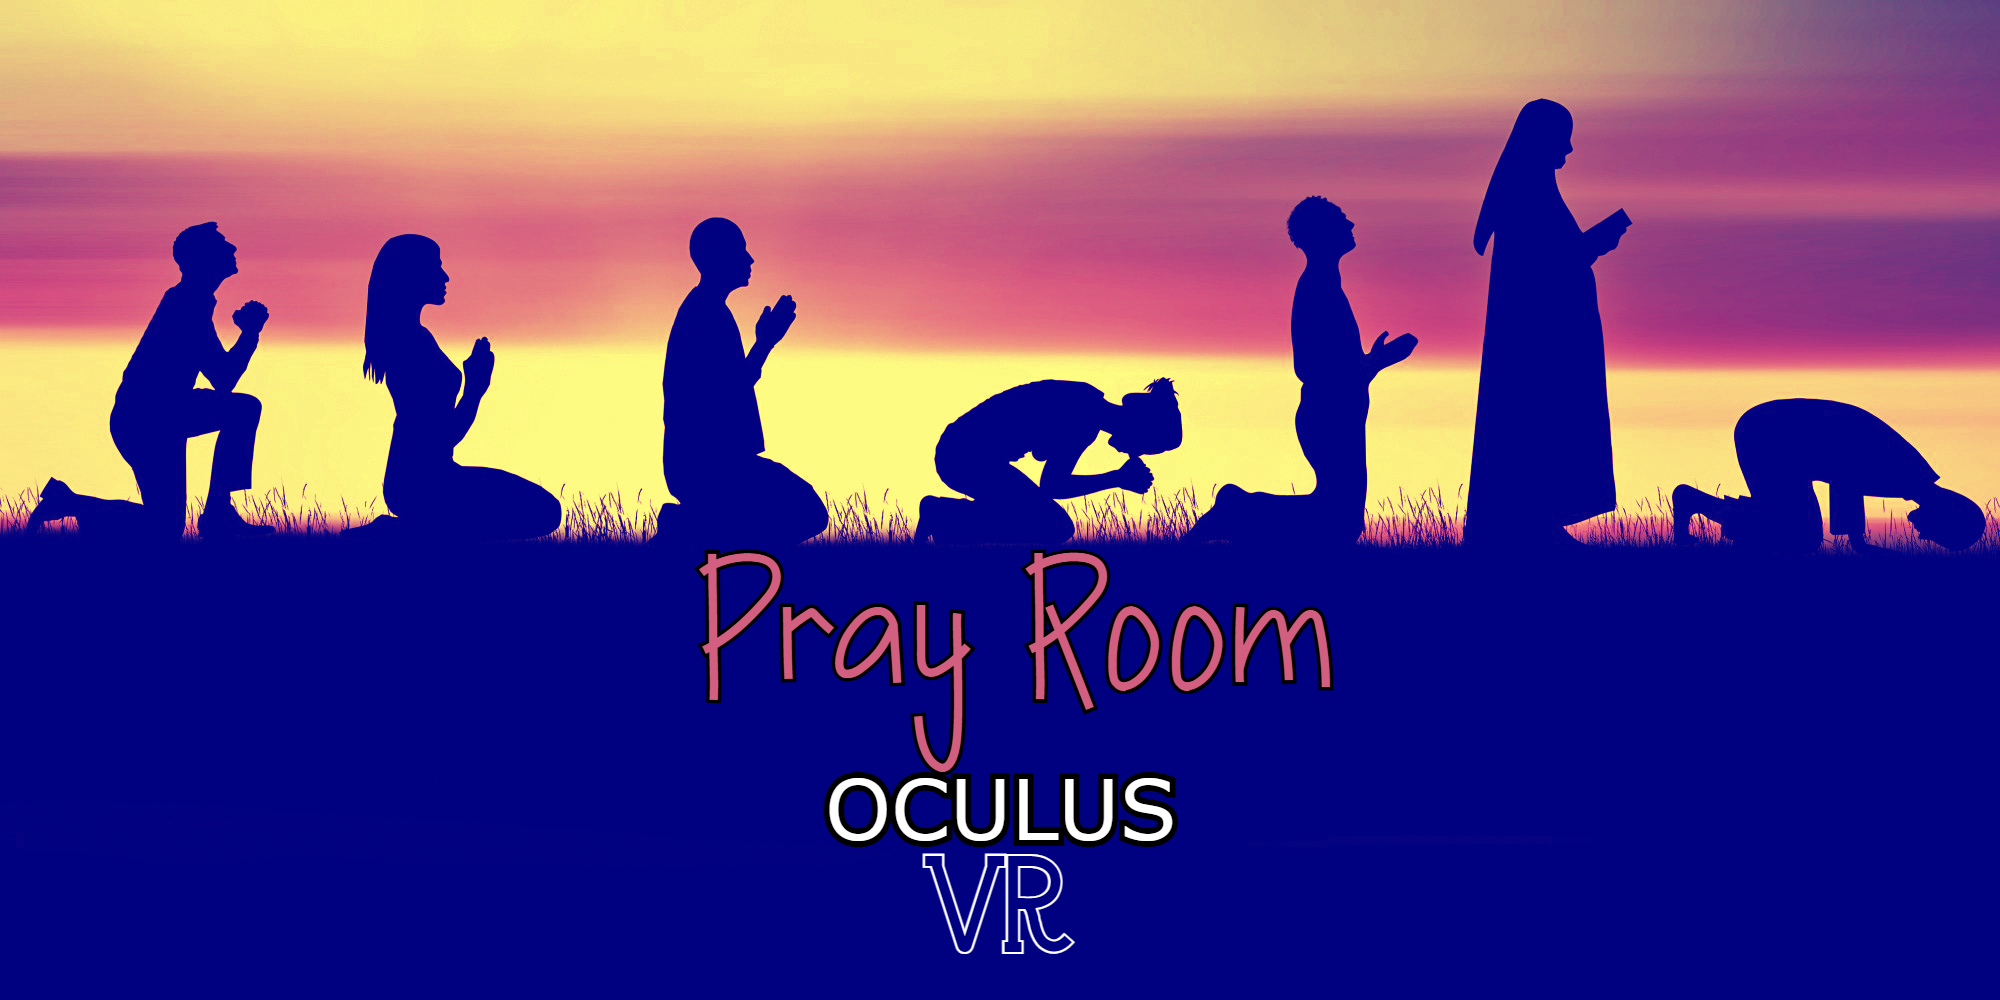 Pray Room for Oculus Quest VR